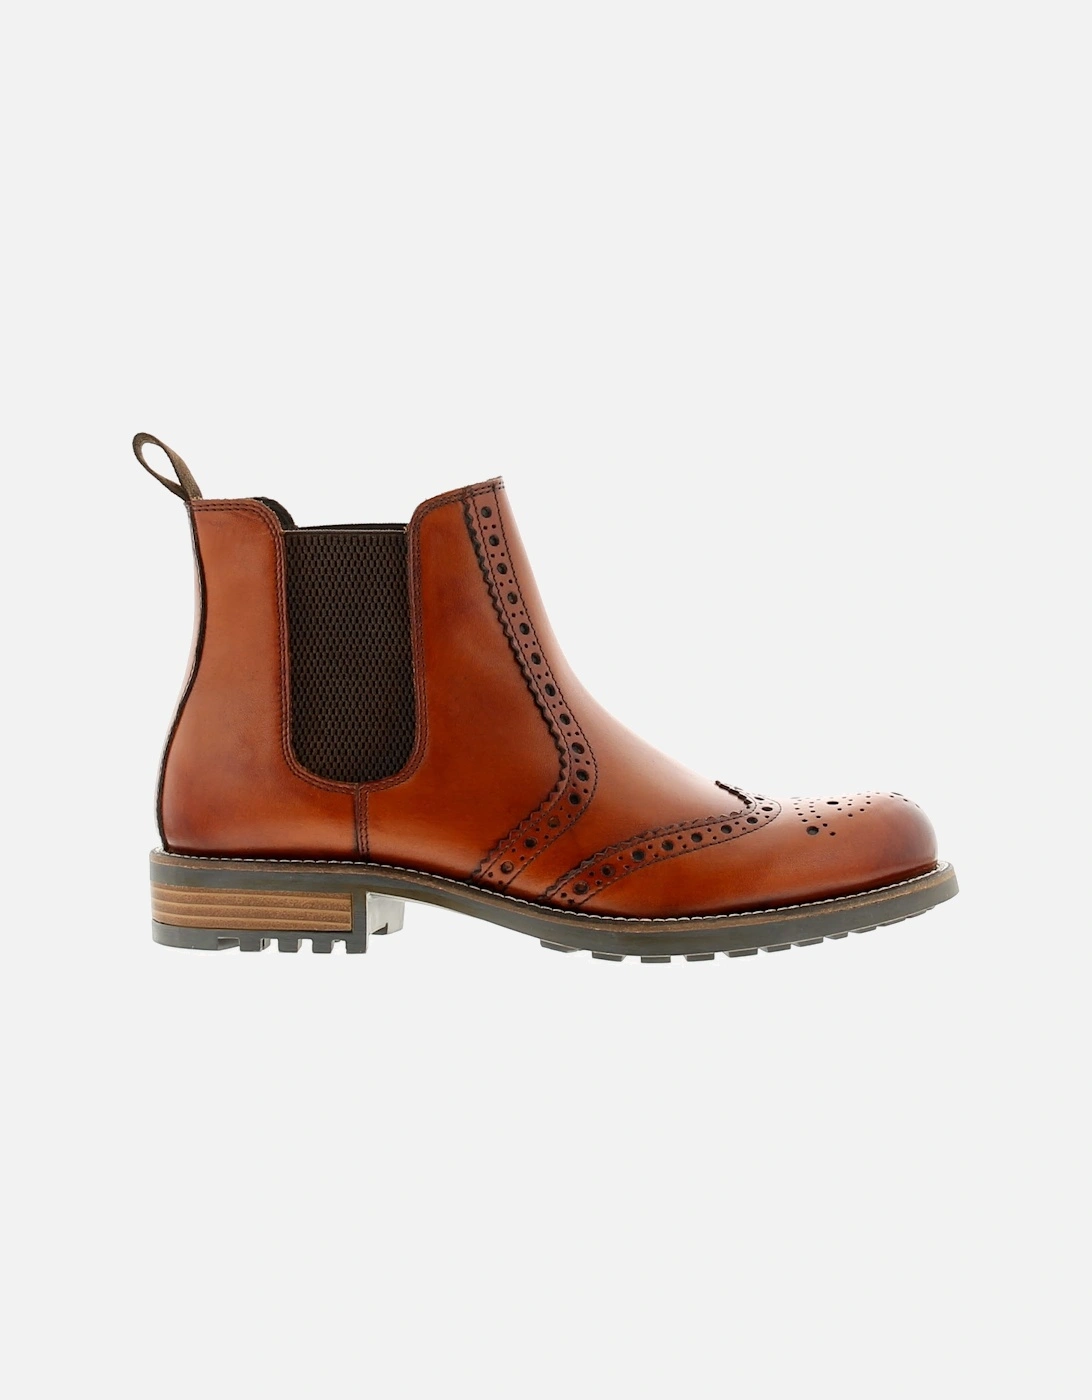 Mens Smart Boots Elgin Leather Slip On tan UK Size